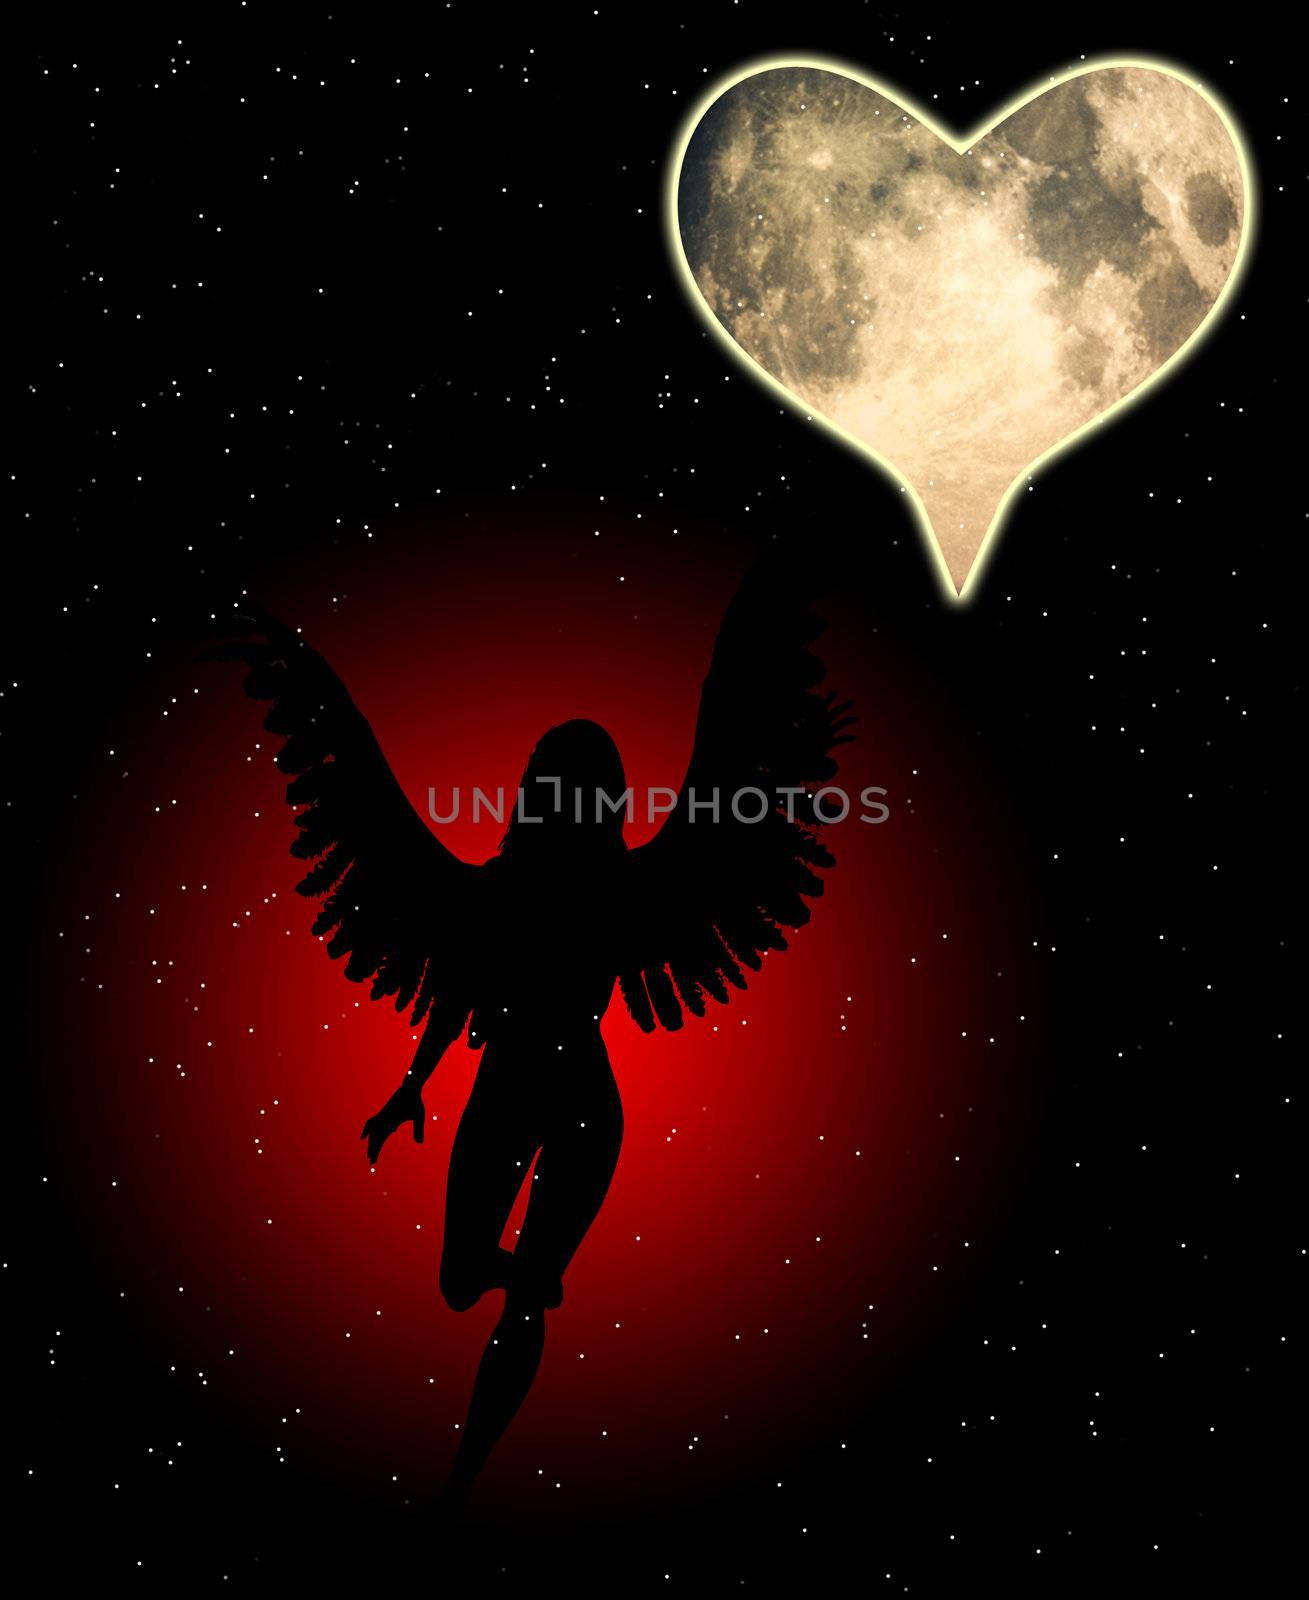 Angel Heart Moon by harveysart